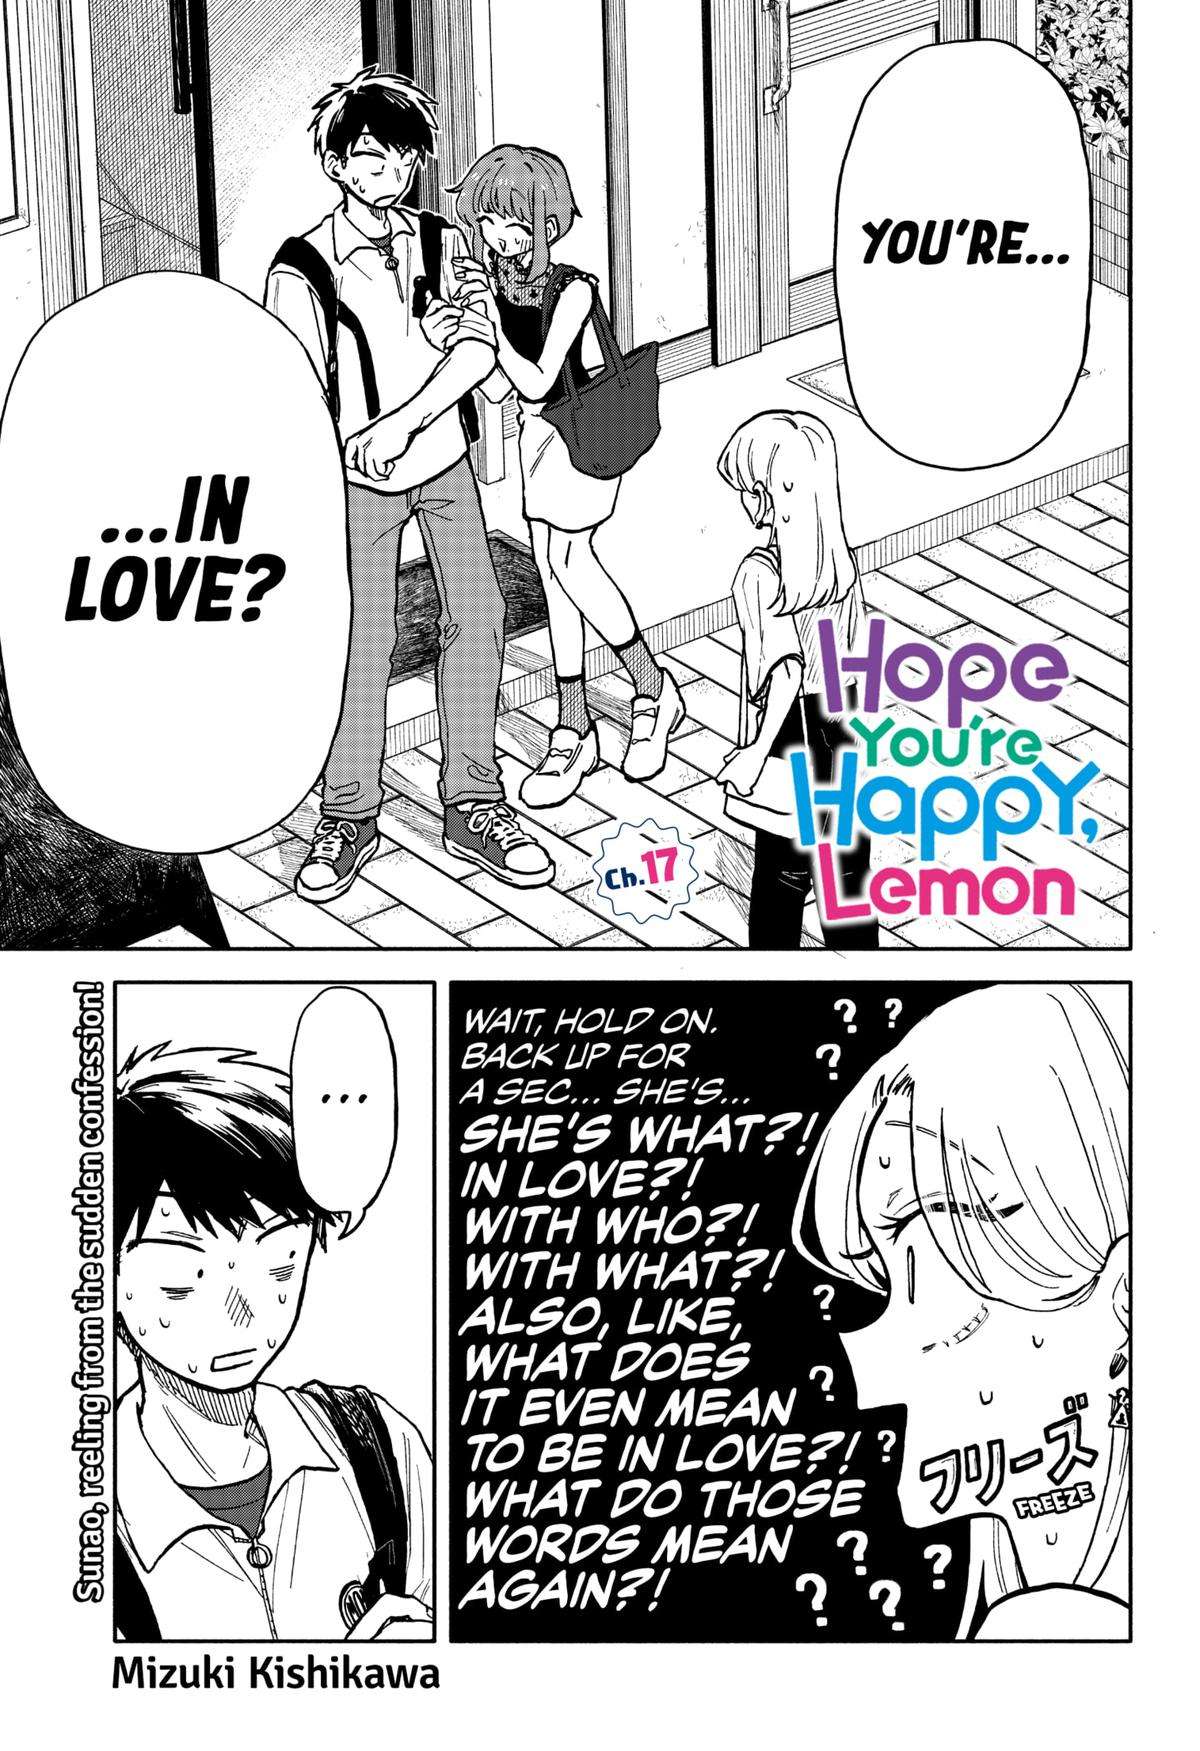 Hope You're Happy, Lemon - chapter 17 - #1